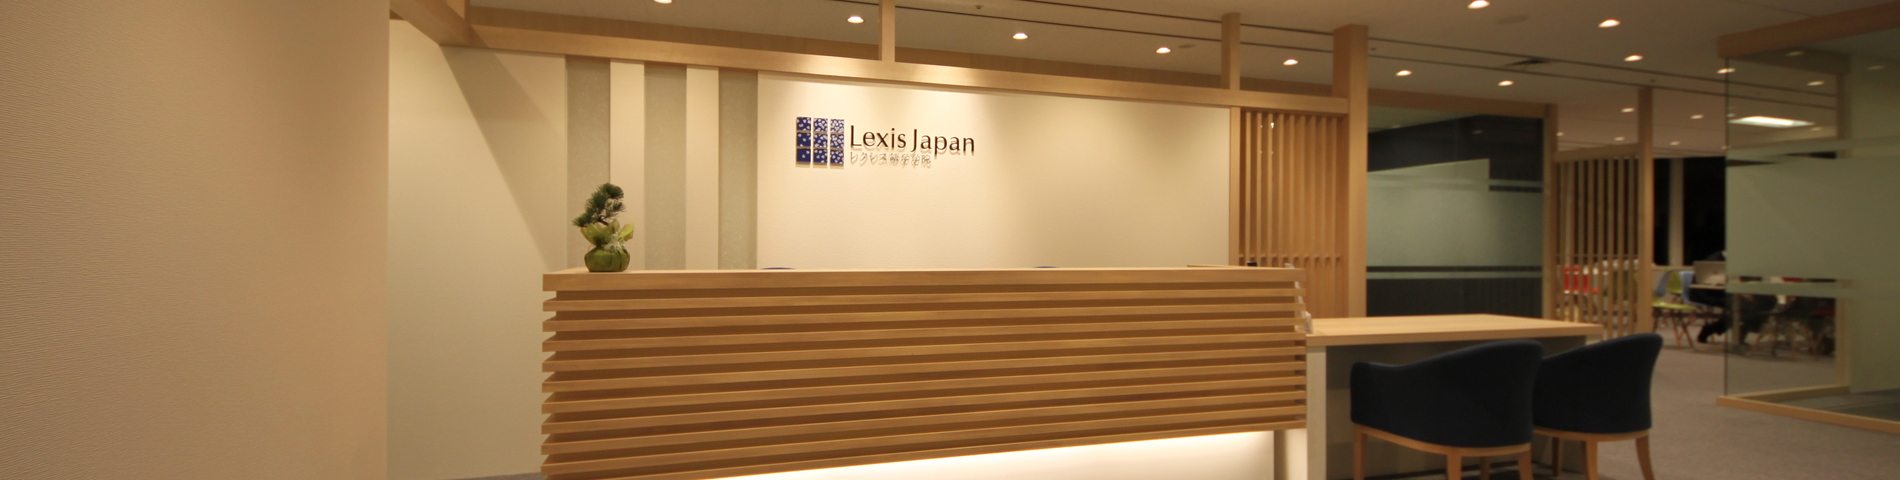 Lexis Japan picture 1